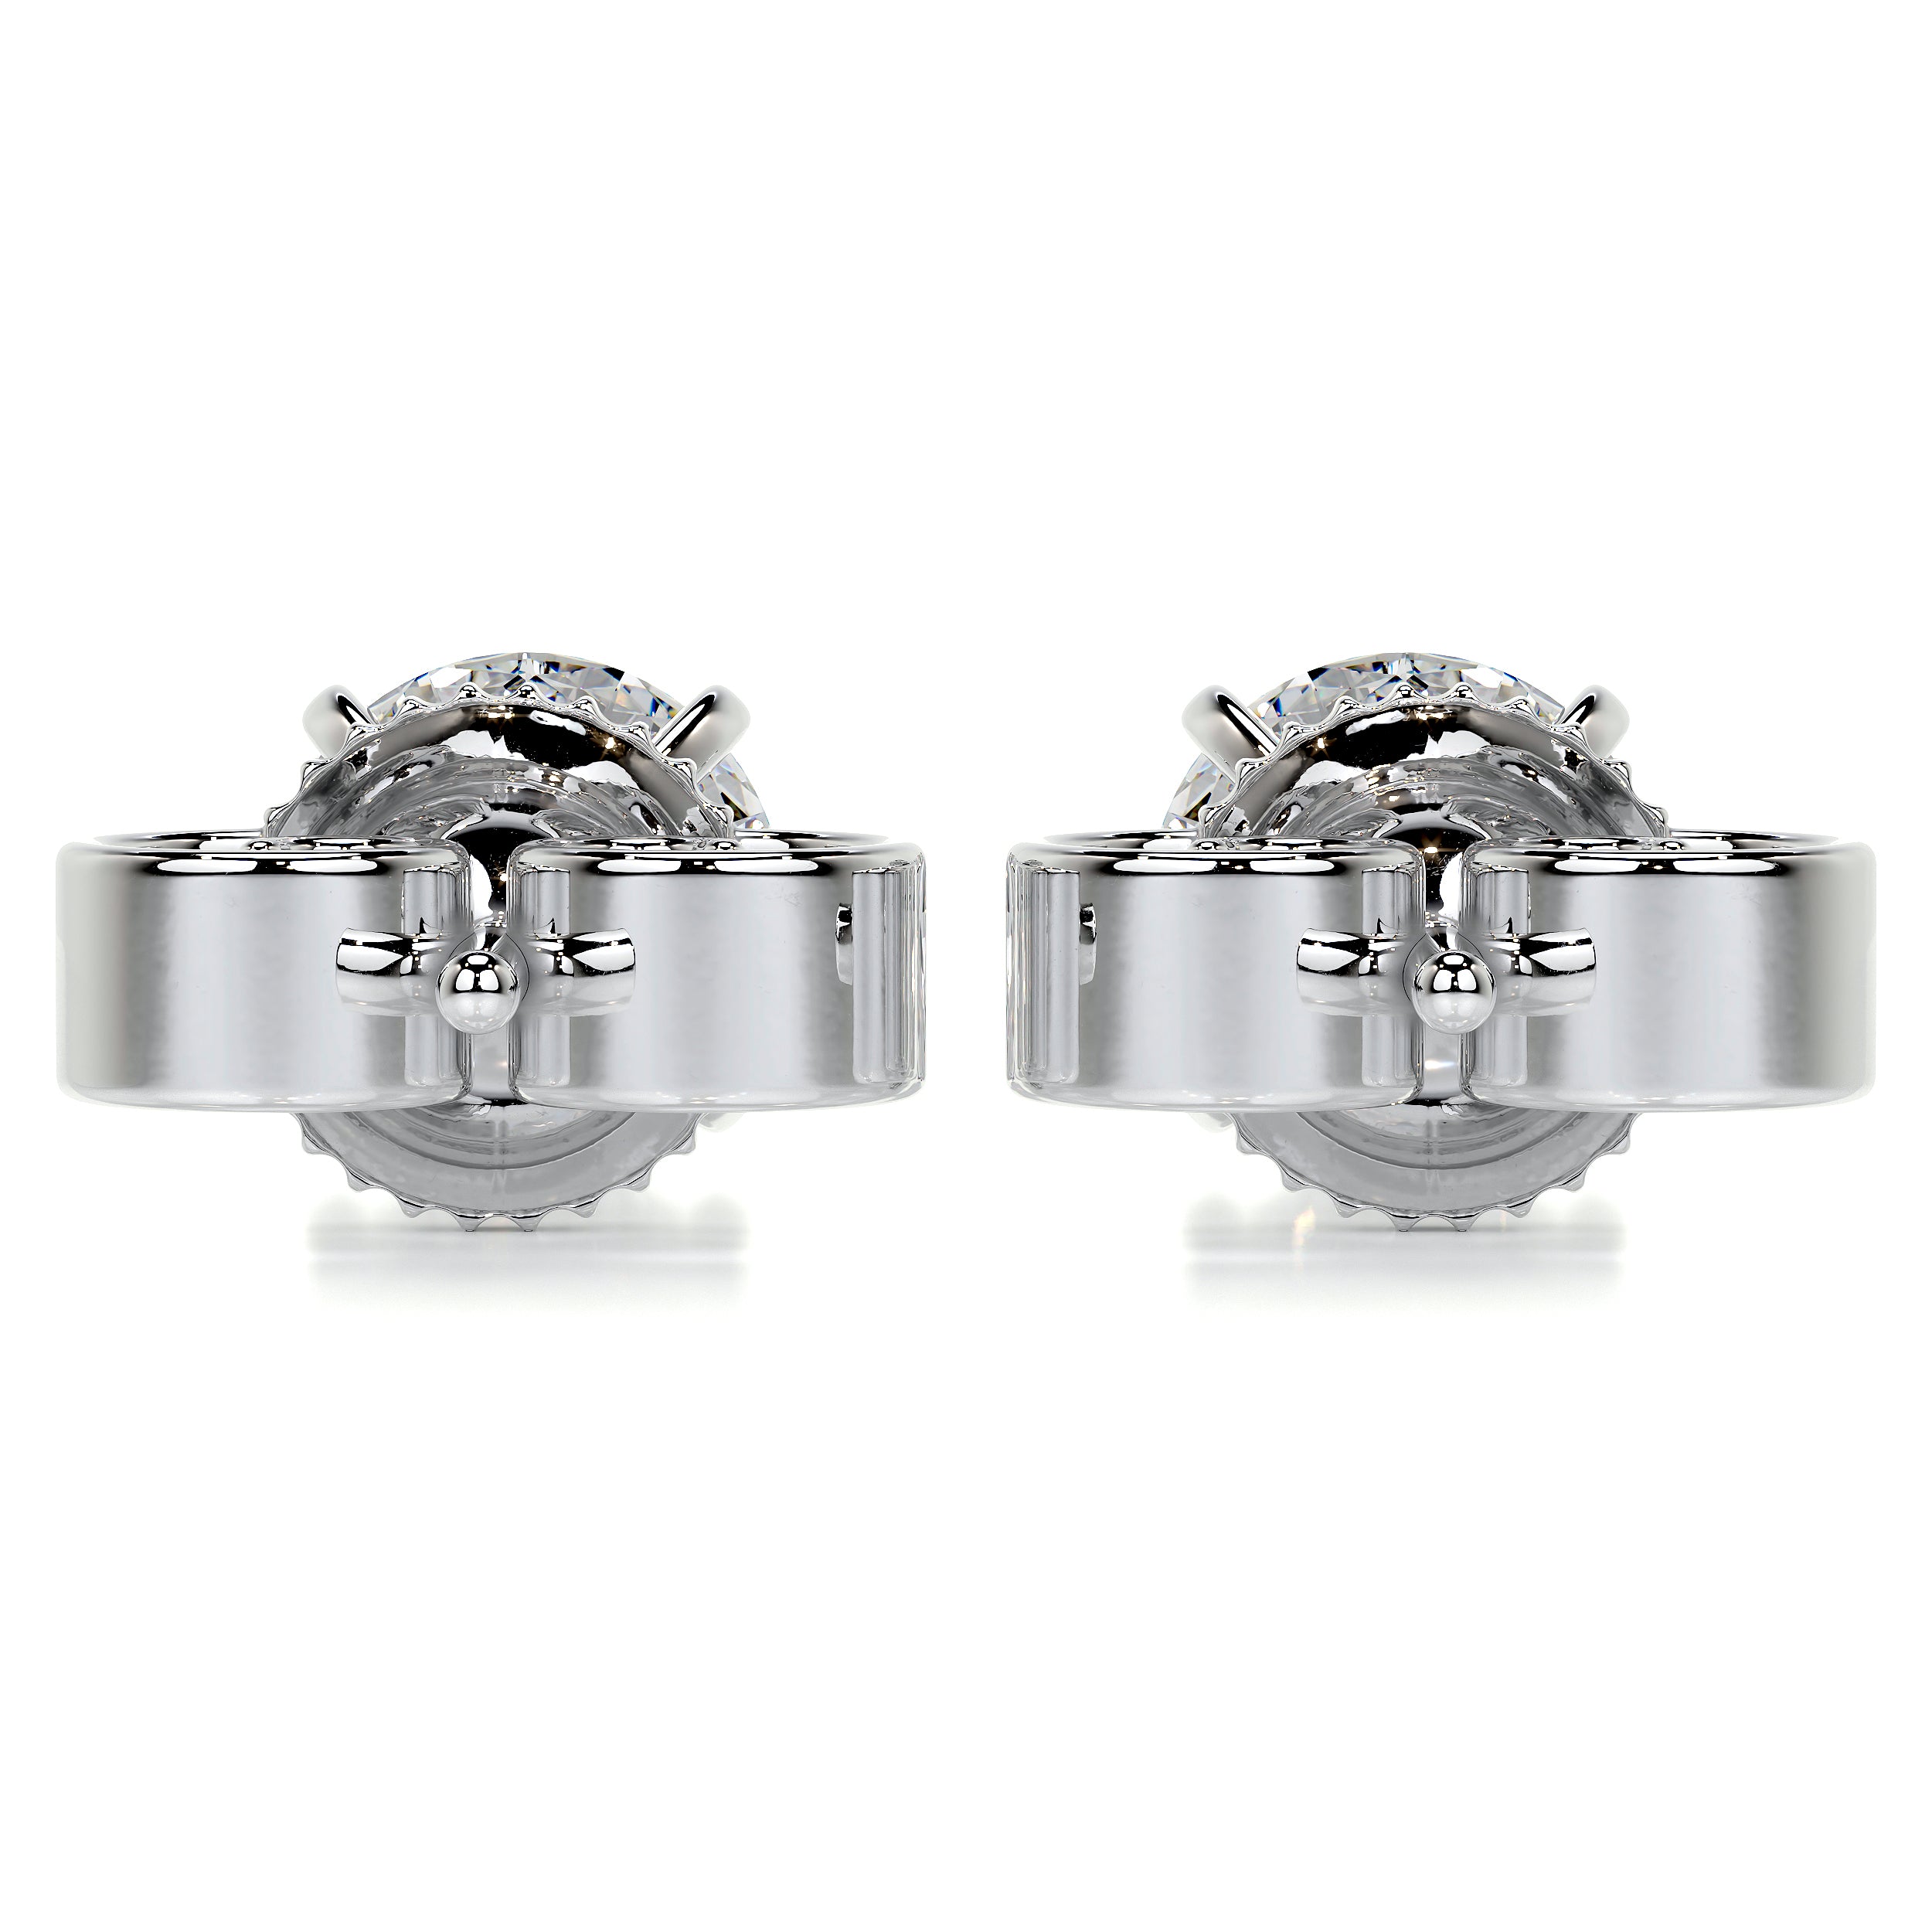 Allen Diamond Earrings   (4 Carat) -14K White Gold